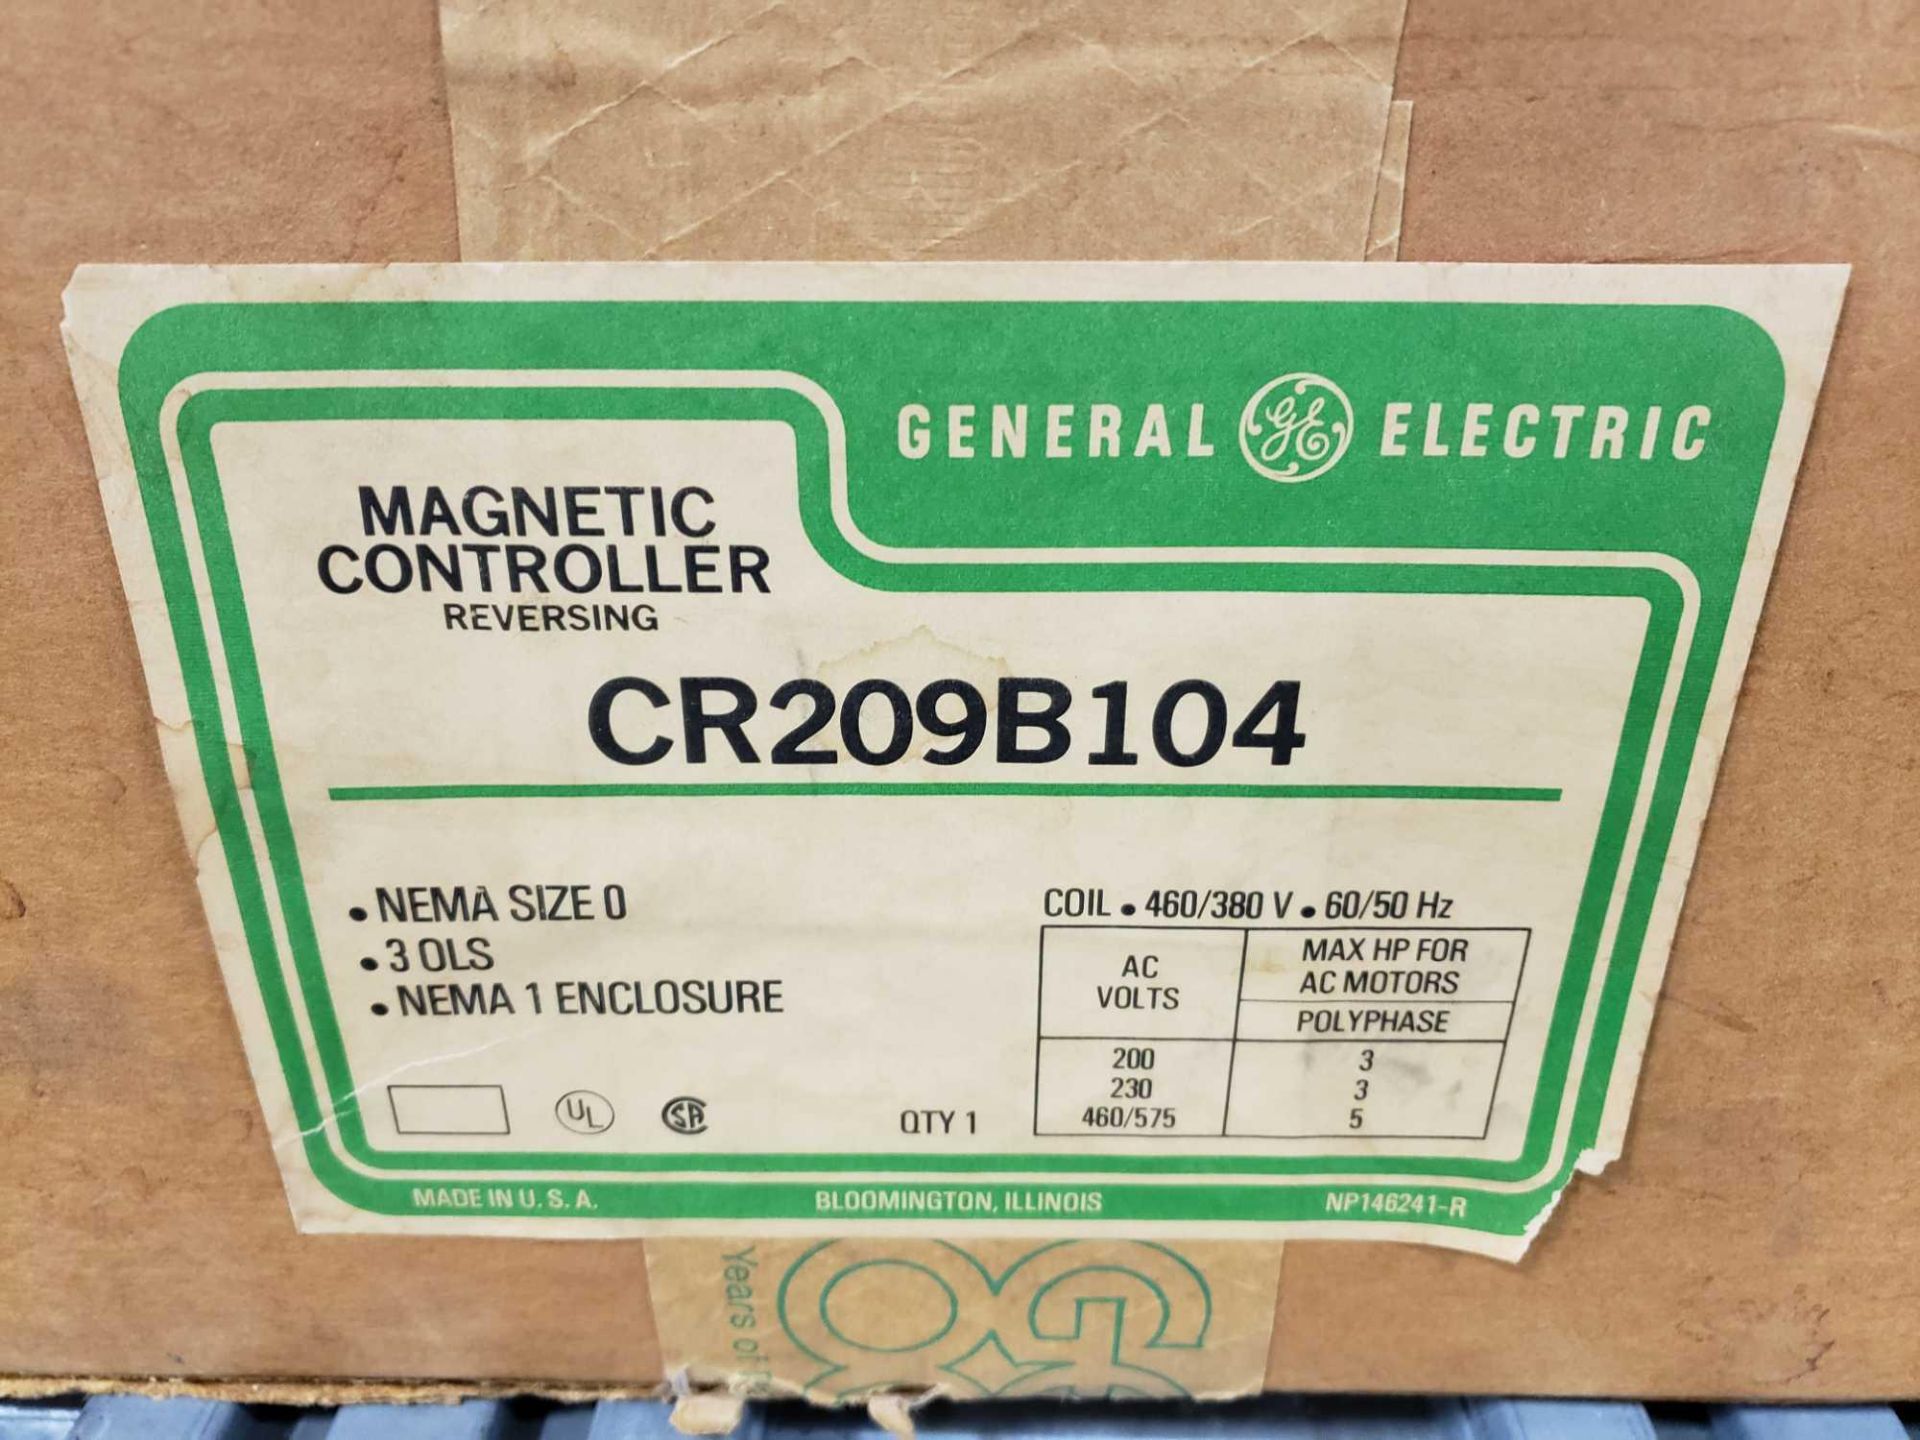 GE magnetic controller reversing contractor CR209B104 Nema size O, nema 1 enclosure. New in box. - Image 2 of 4